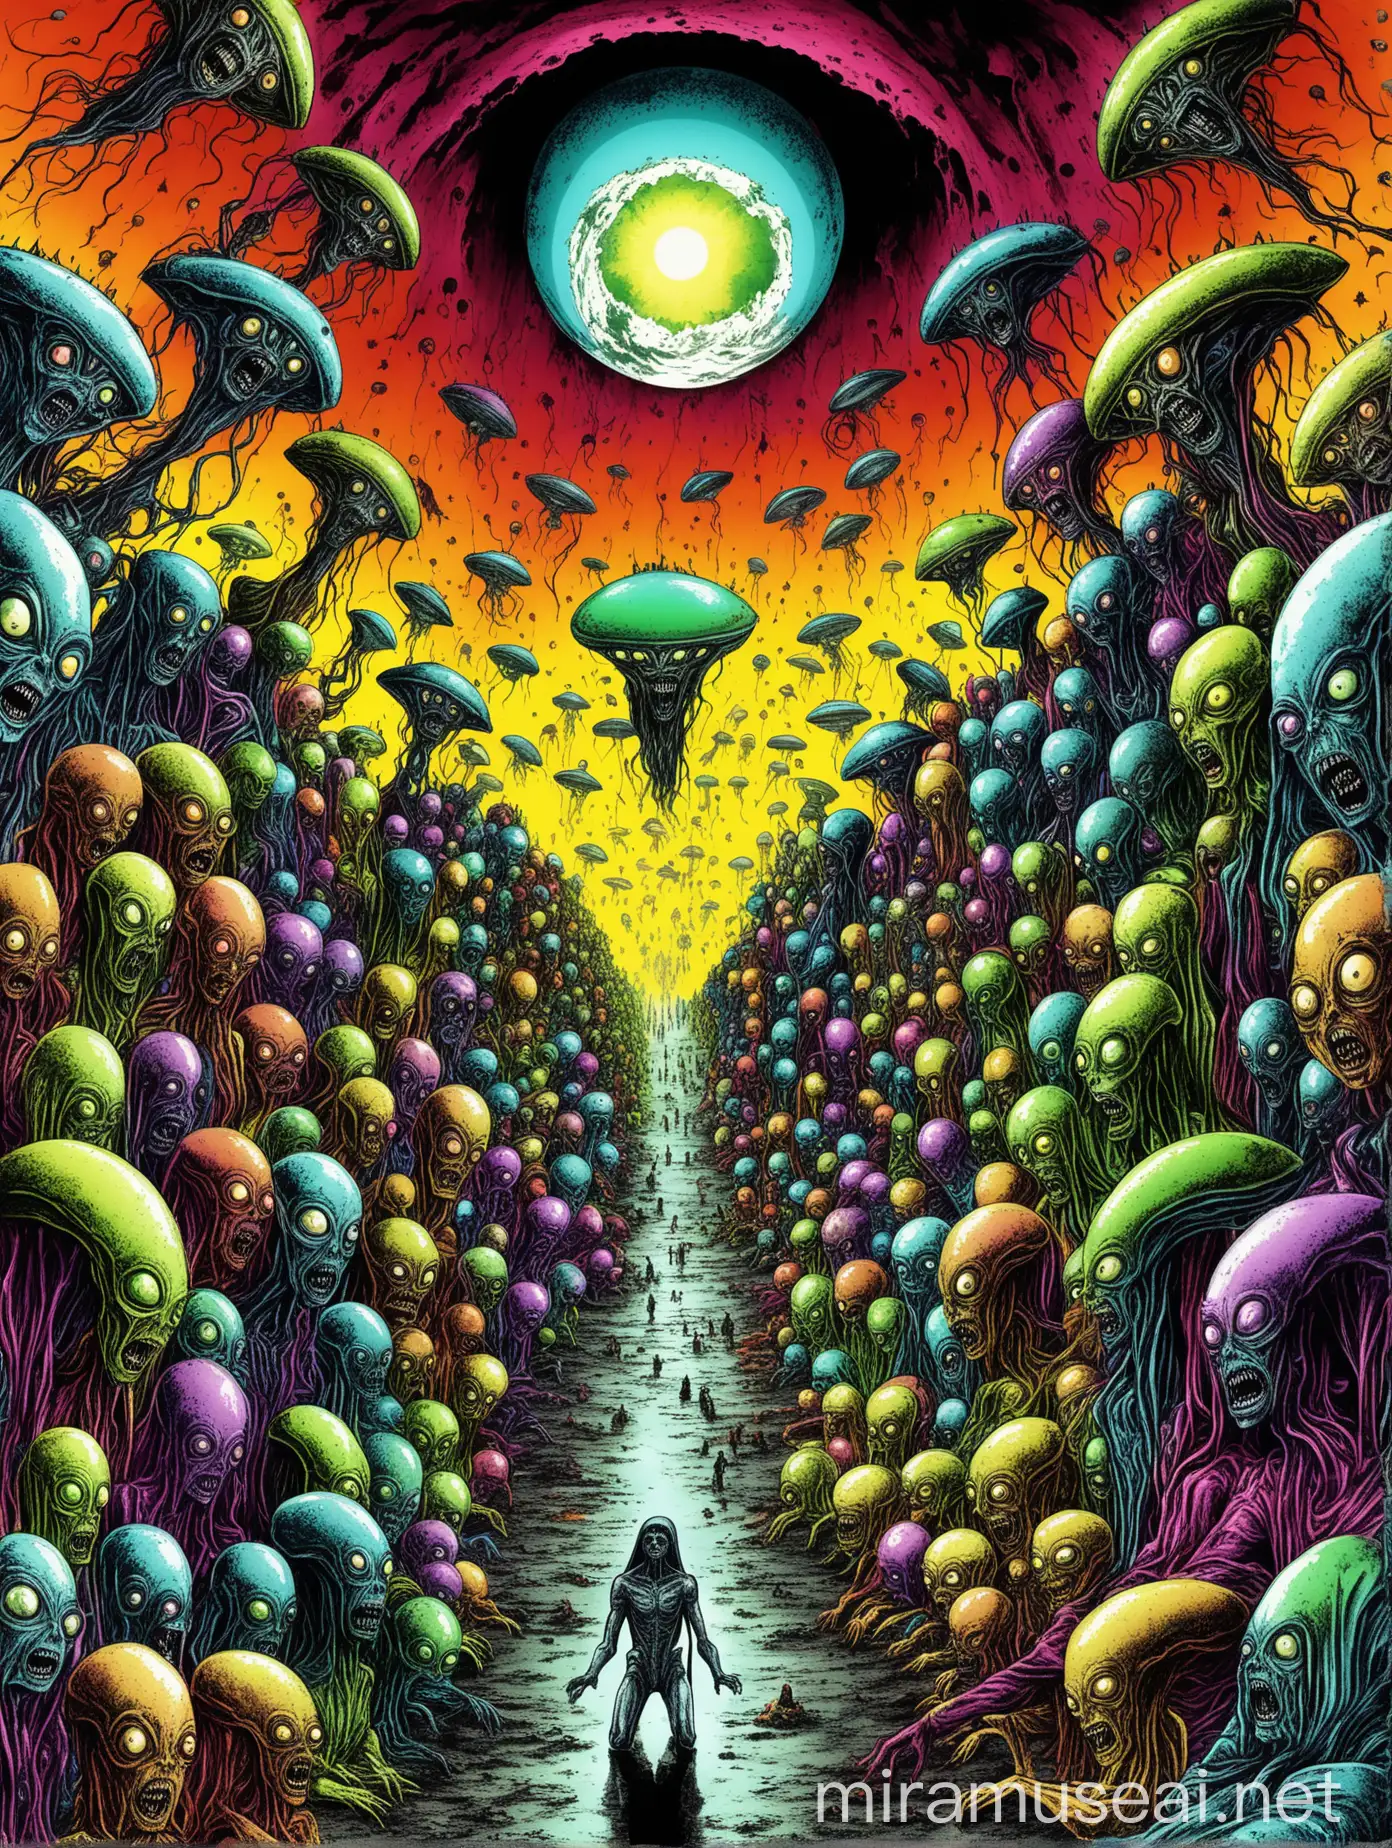 A beautiful colorul surreal scene, similar to Salvador Dahli, in a horrifice manga setting of aliens taking over Earth